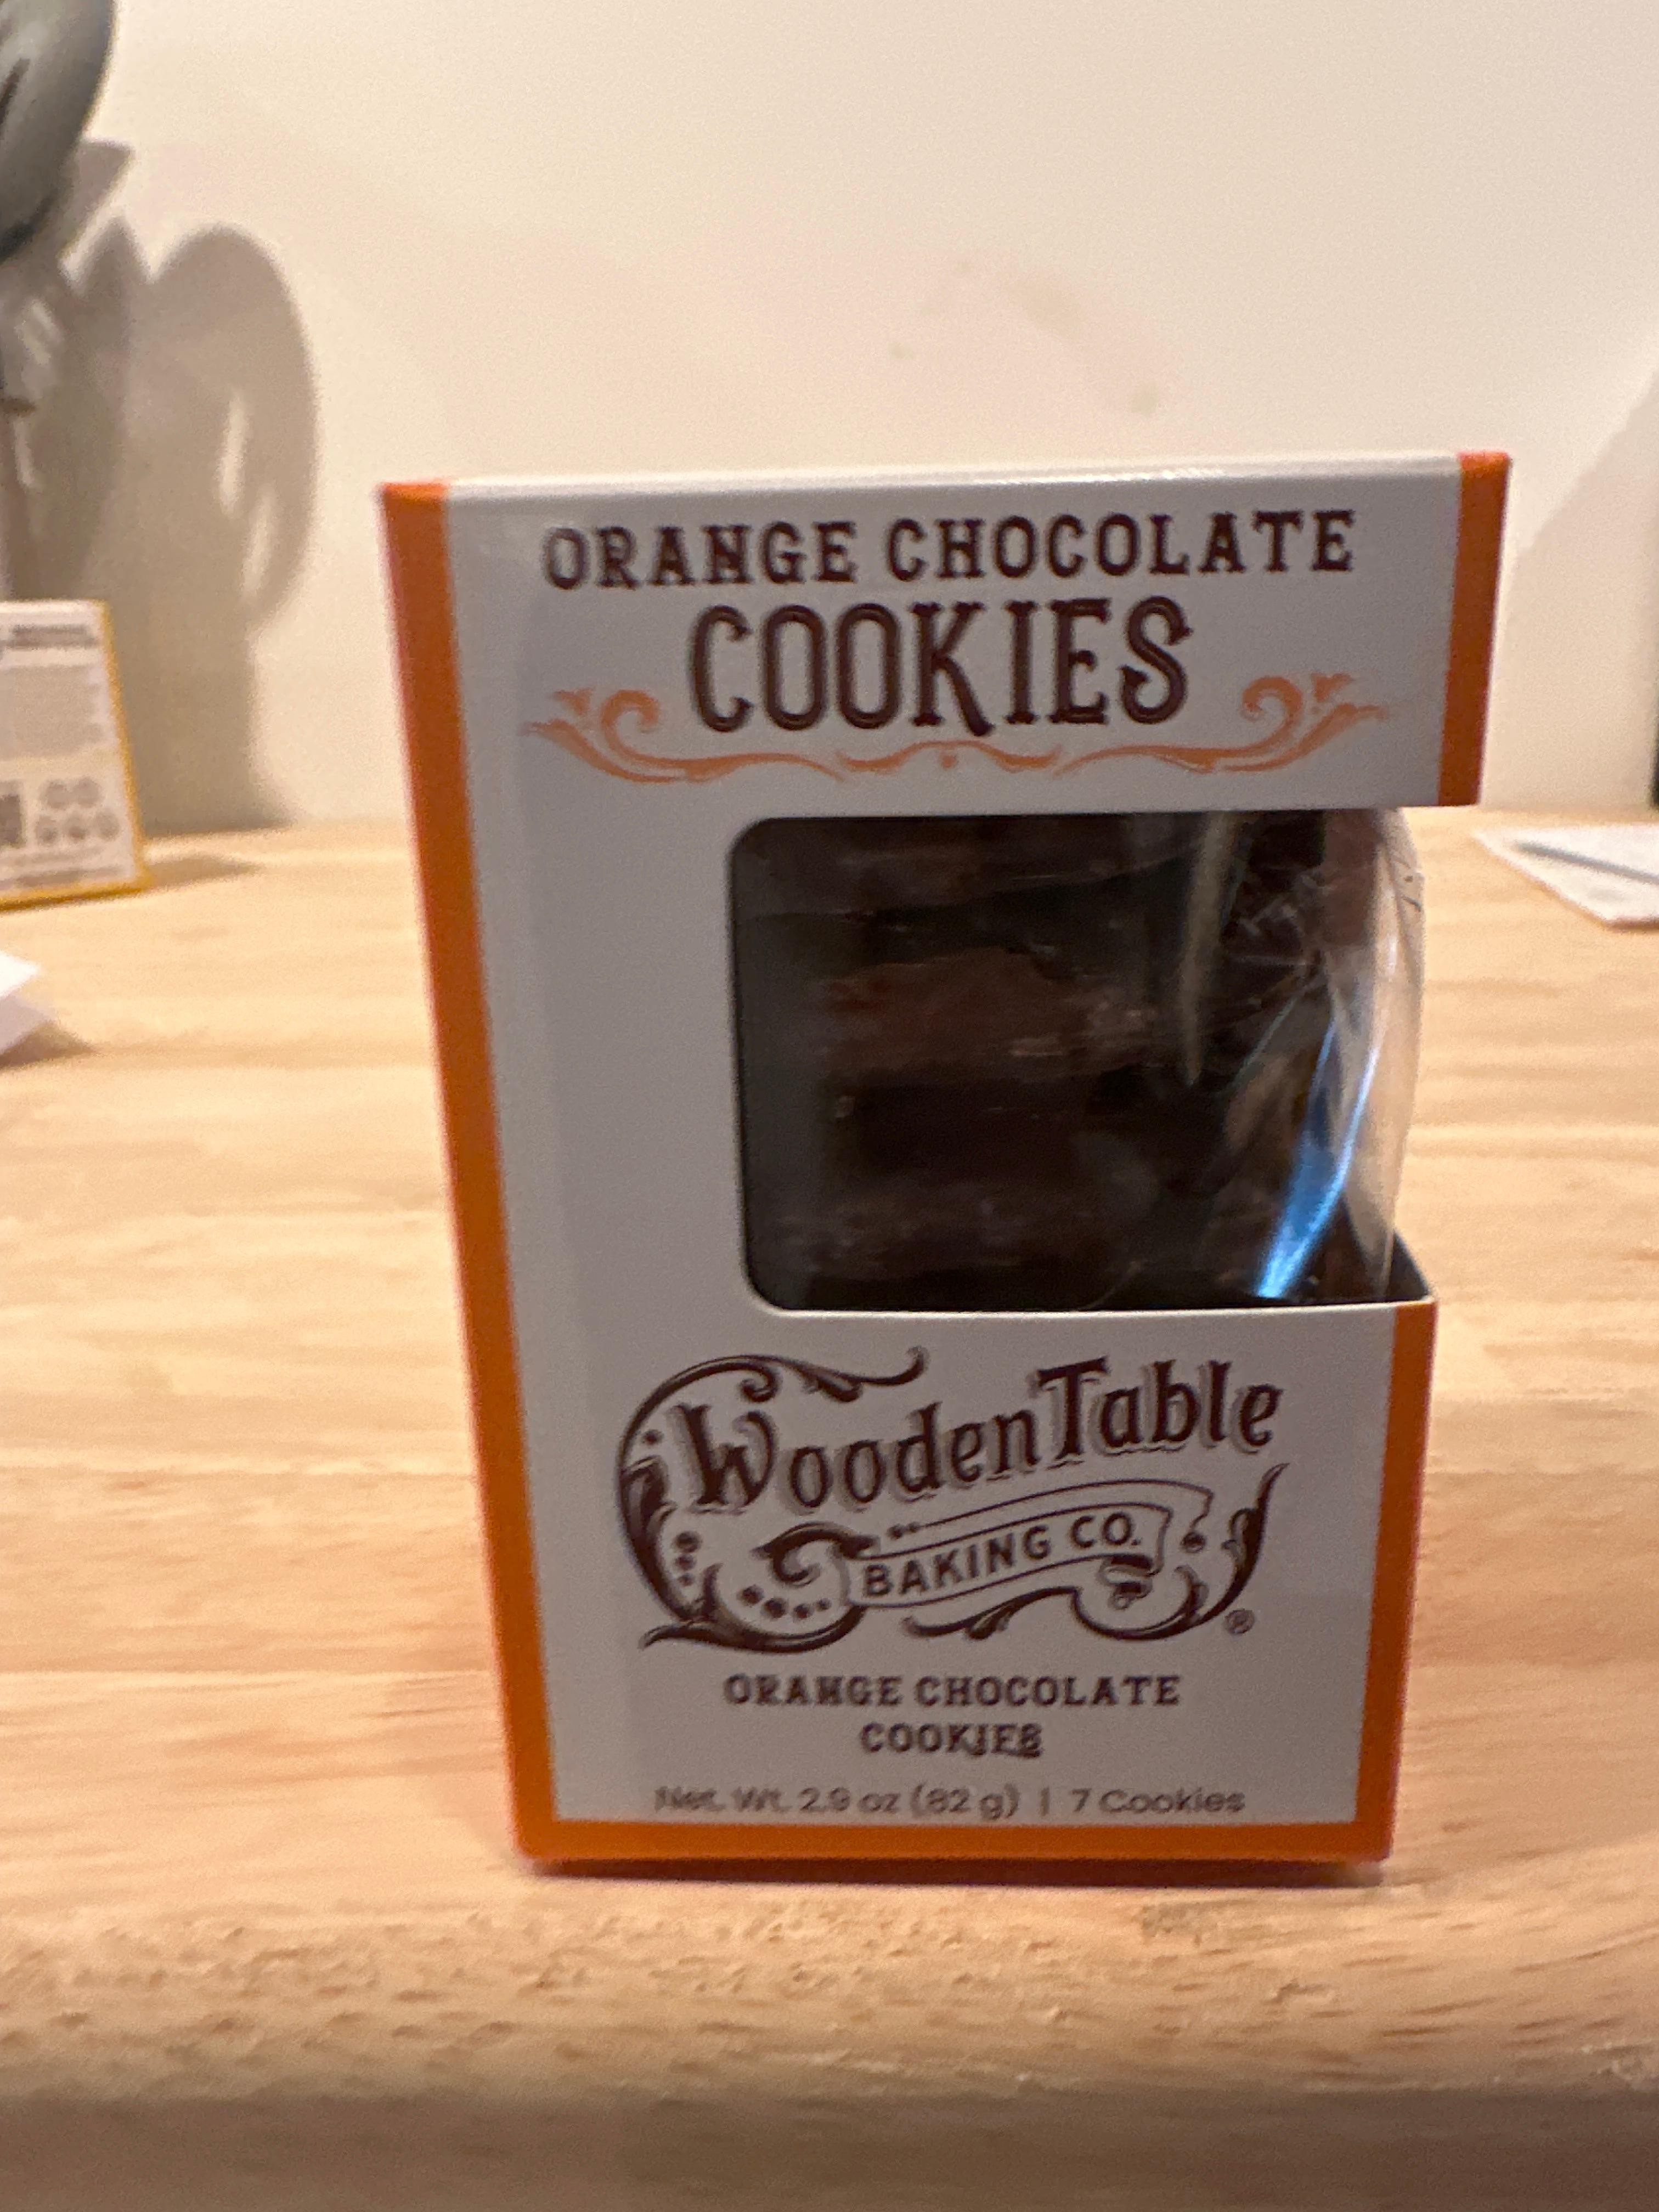 Orange chocolate cookies